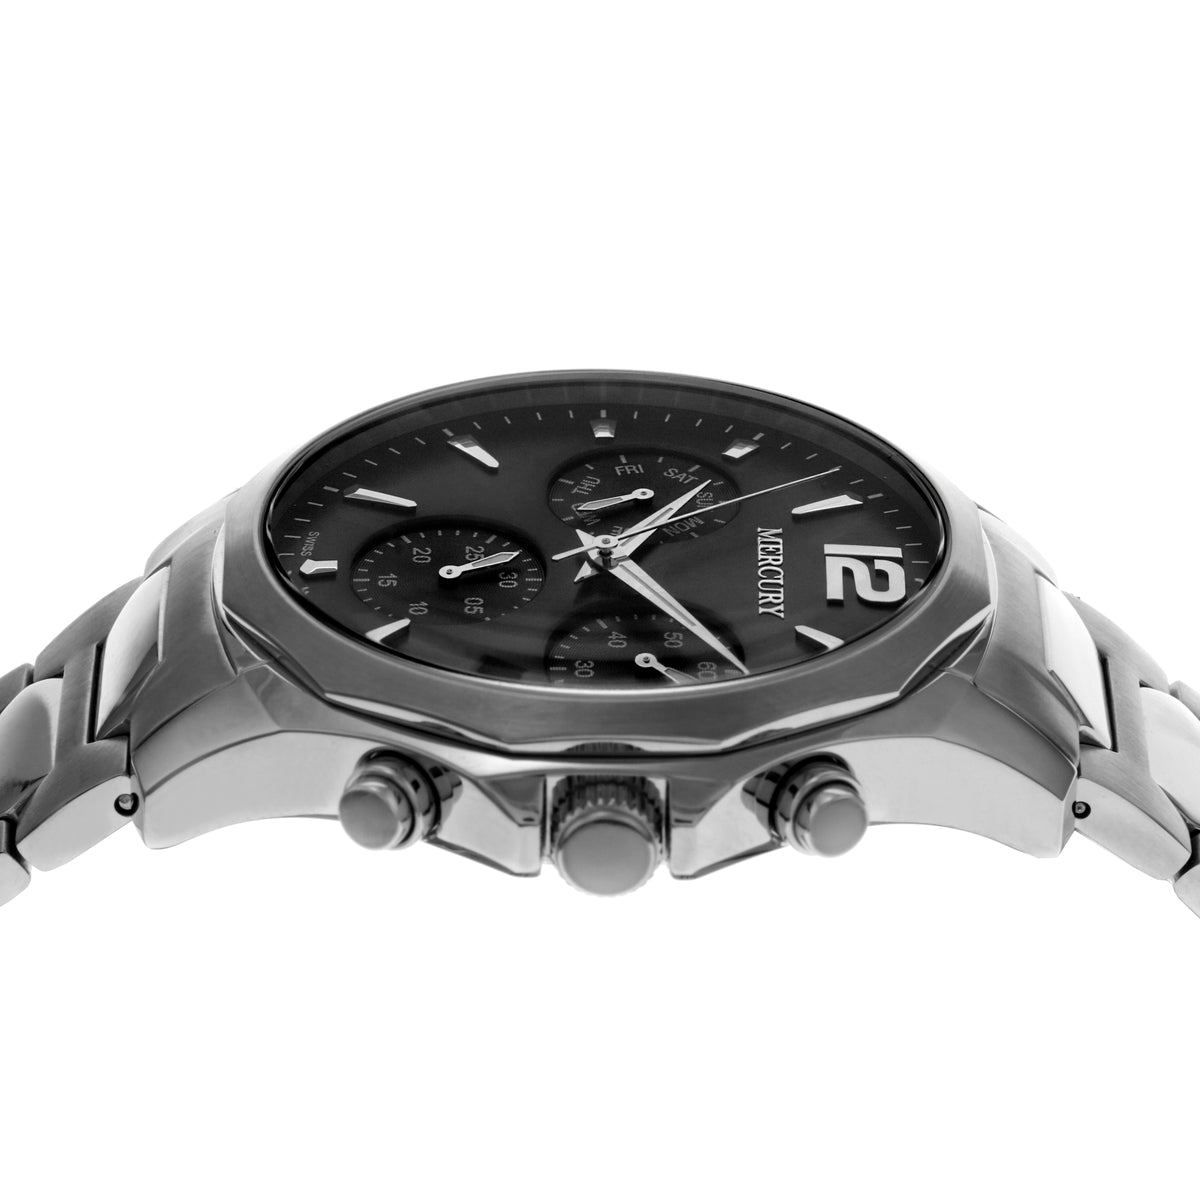 Mercury Men's Swiss Quartz Watch with Black Dial - MER-0013